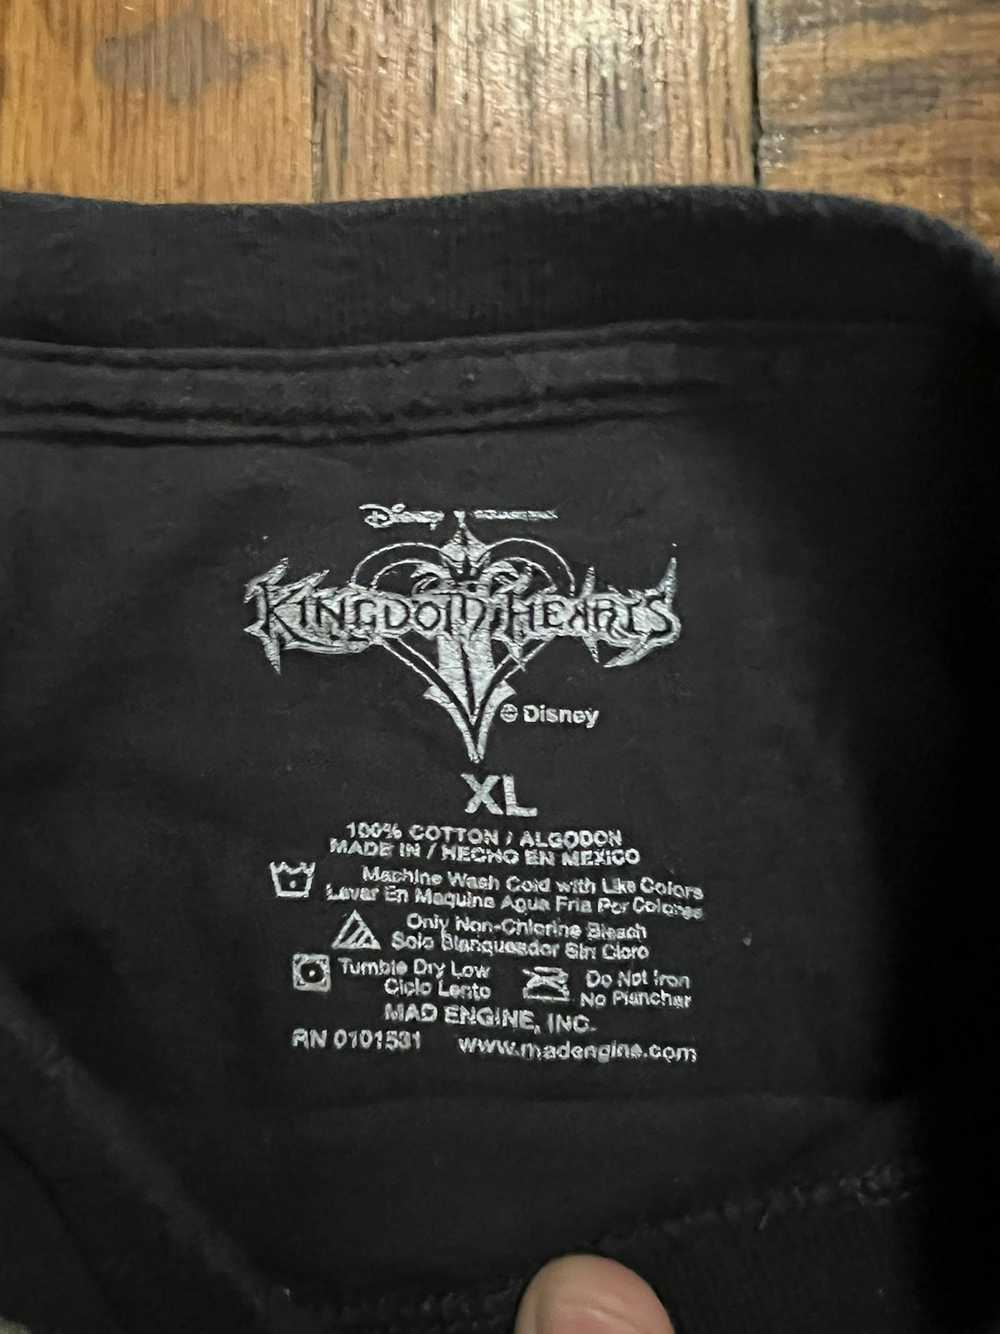 Vintage Vintage Kingdom Hearts T-Shirt 2000s Y2k - image 3